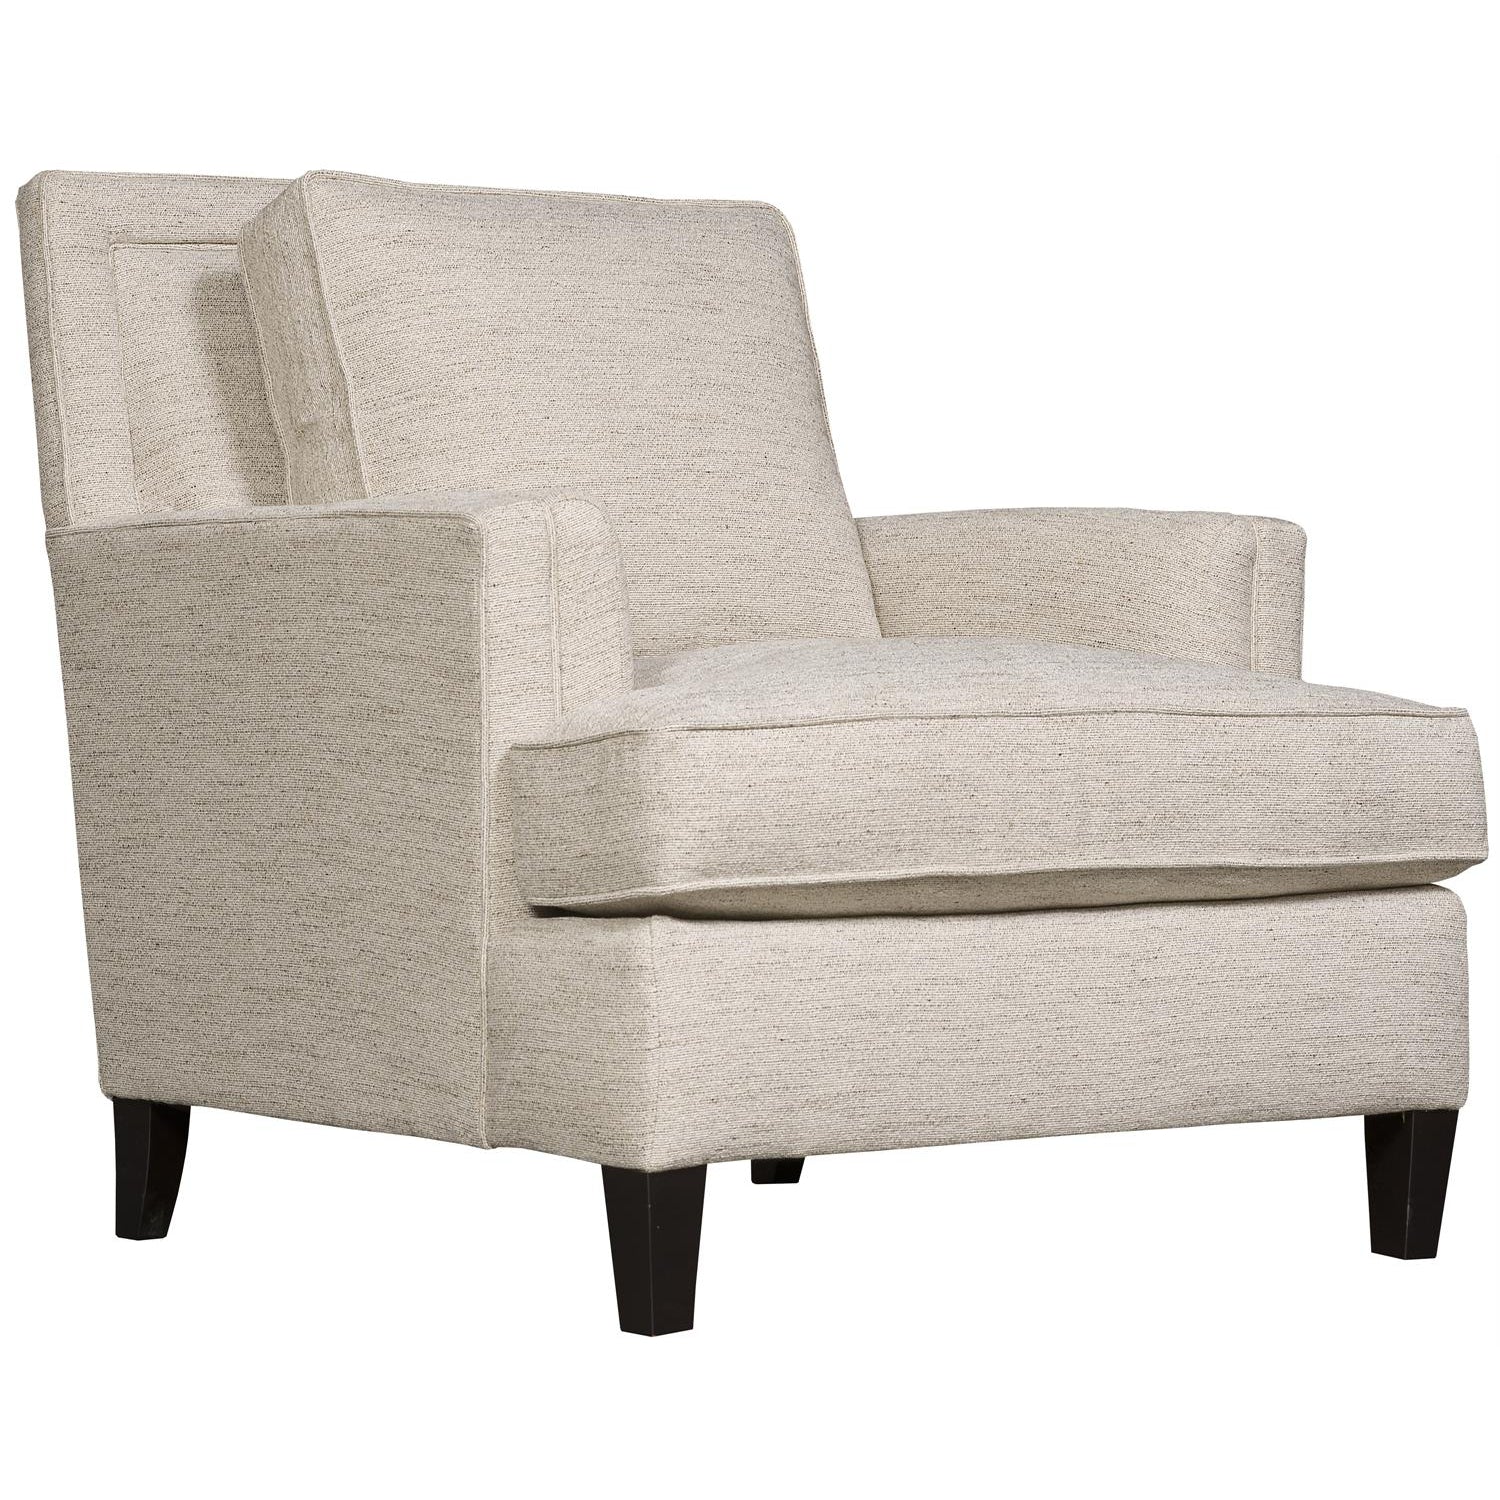 Bernhardt, Addison Fabric Chair